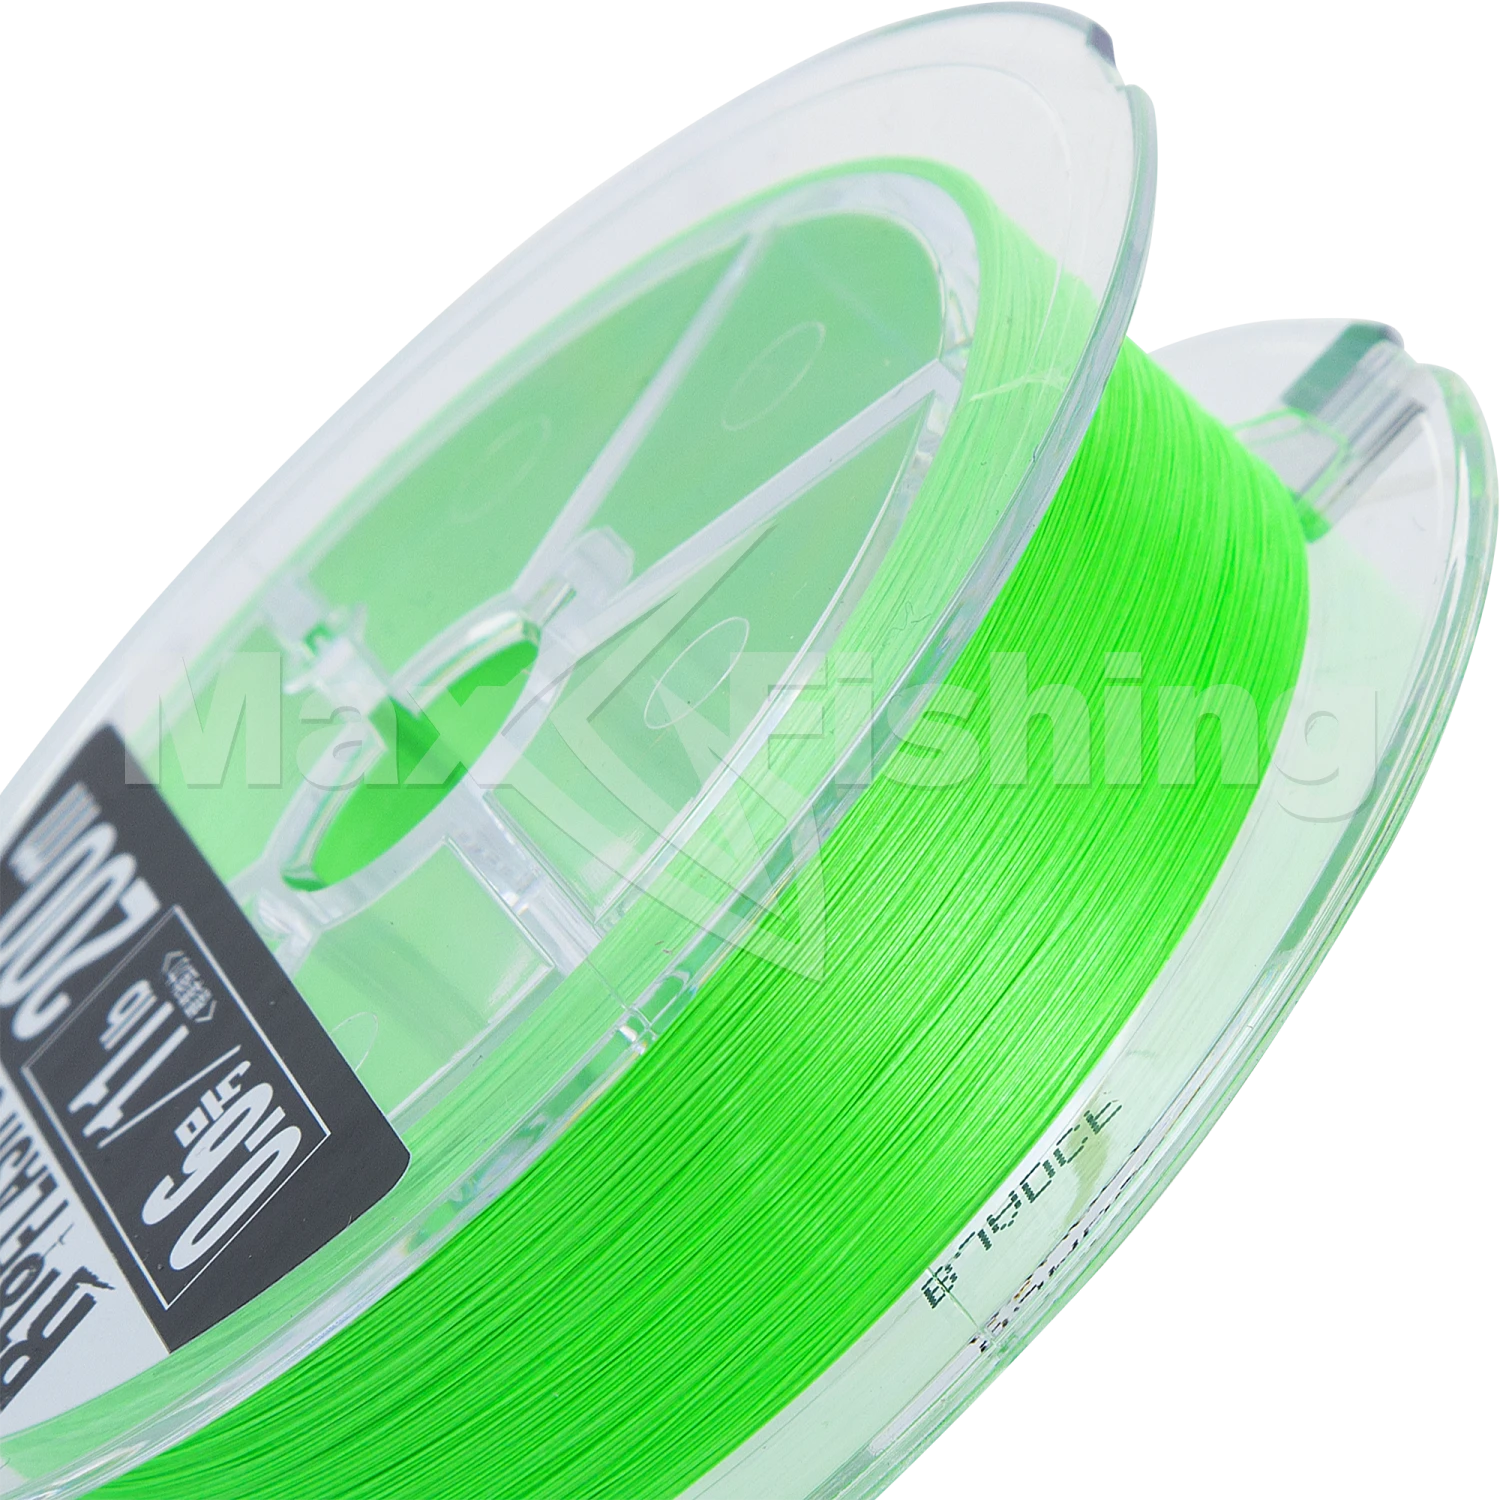 Шнур плетеный Seaguar R-18 Kanzen Seabass PE X8 #0,6 0,128мм 200м (flash green)